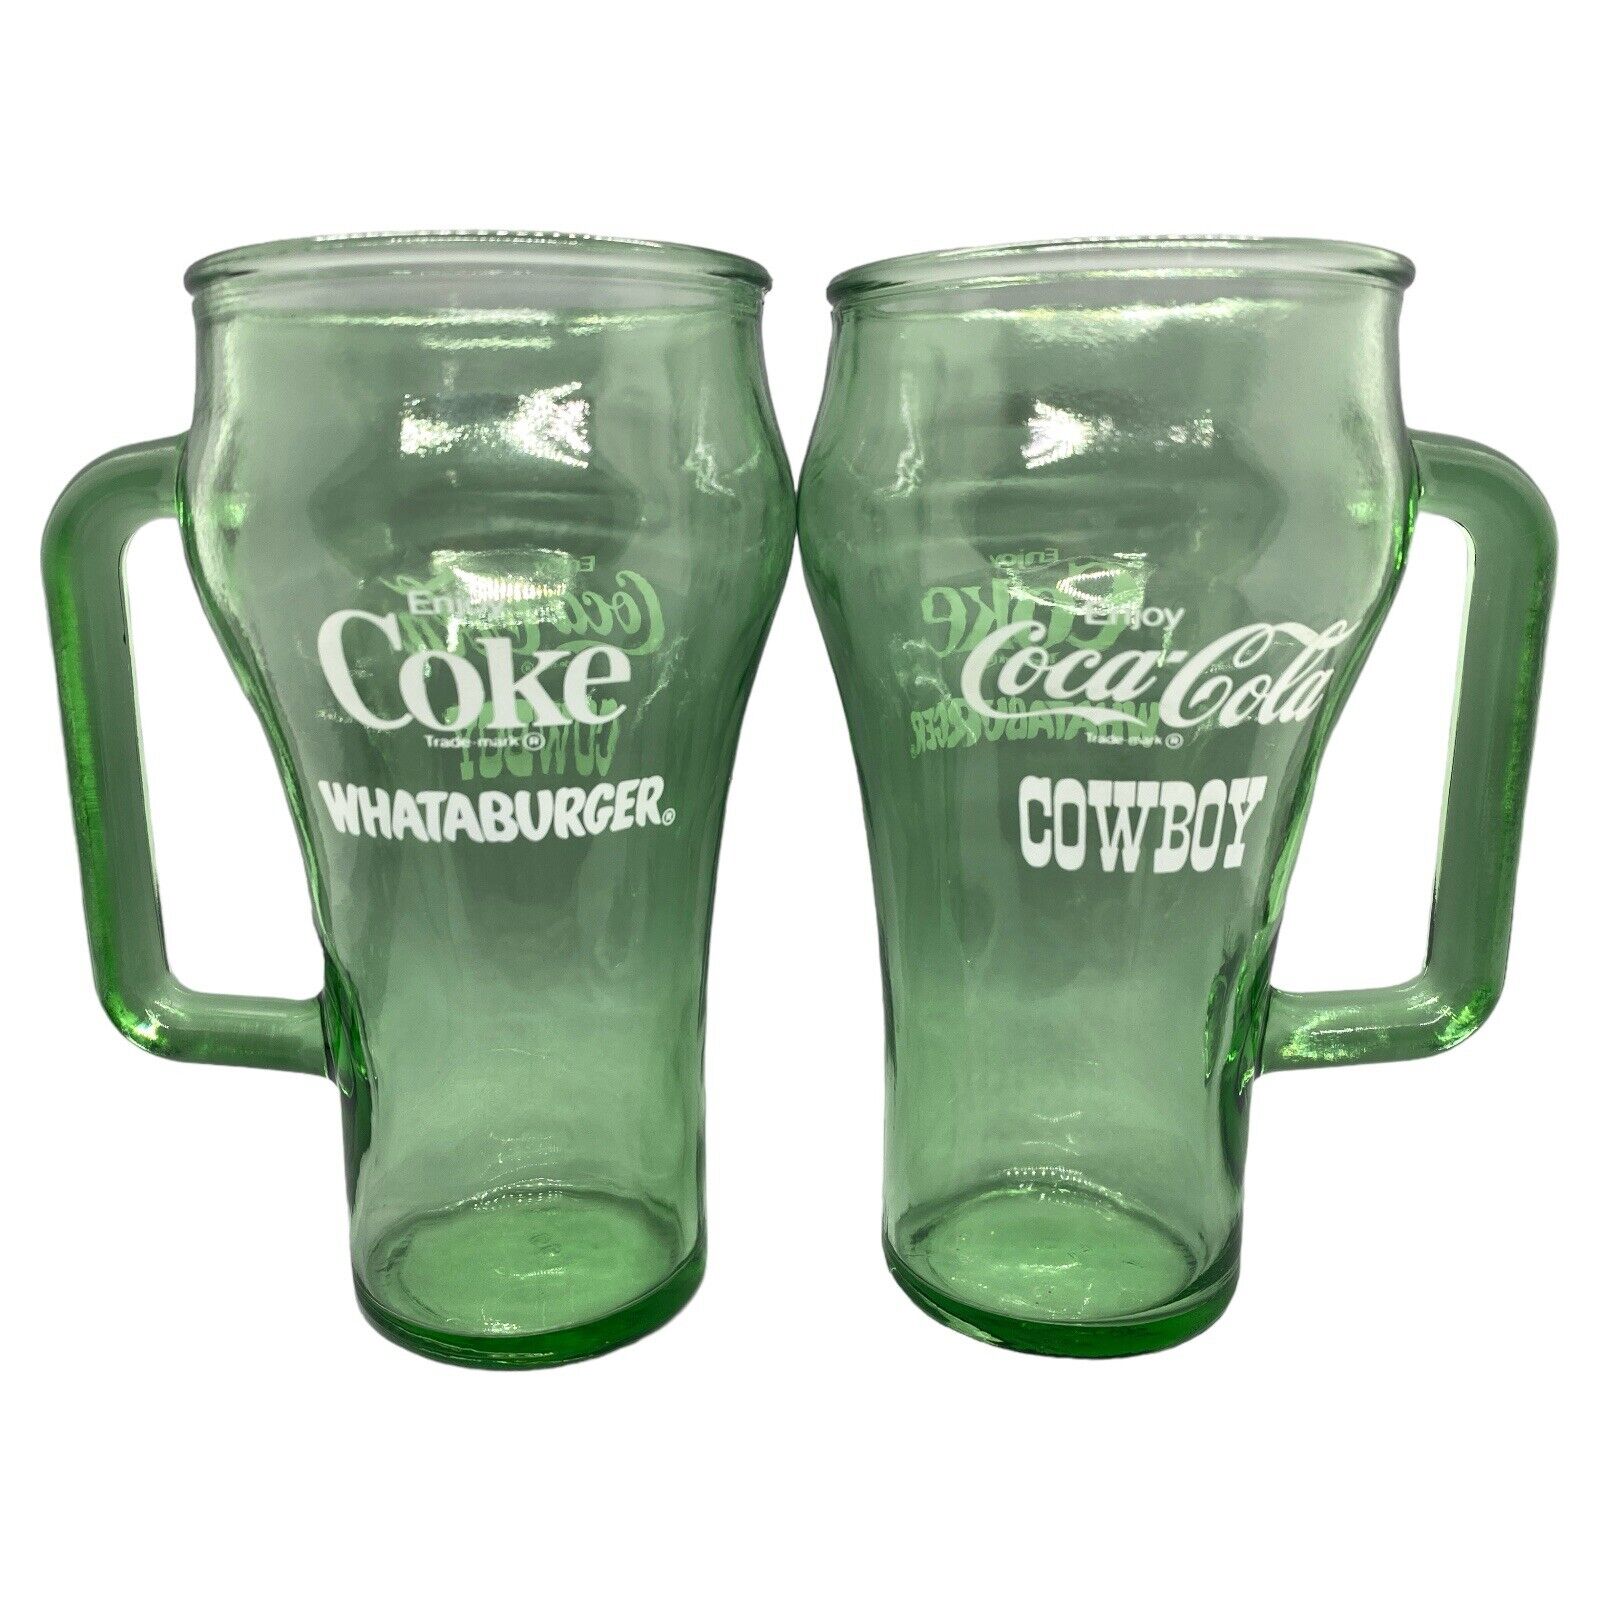 VTG Dallas Cowboys Lot of 2 Whataburger Coke Glass Mug Green Glass D Handle Cup